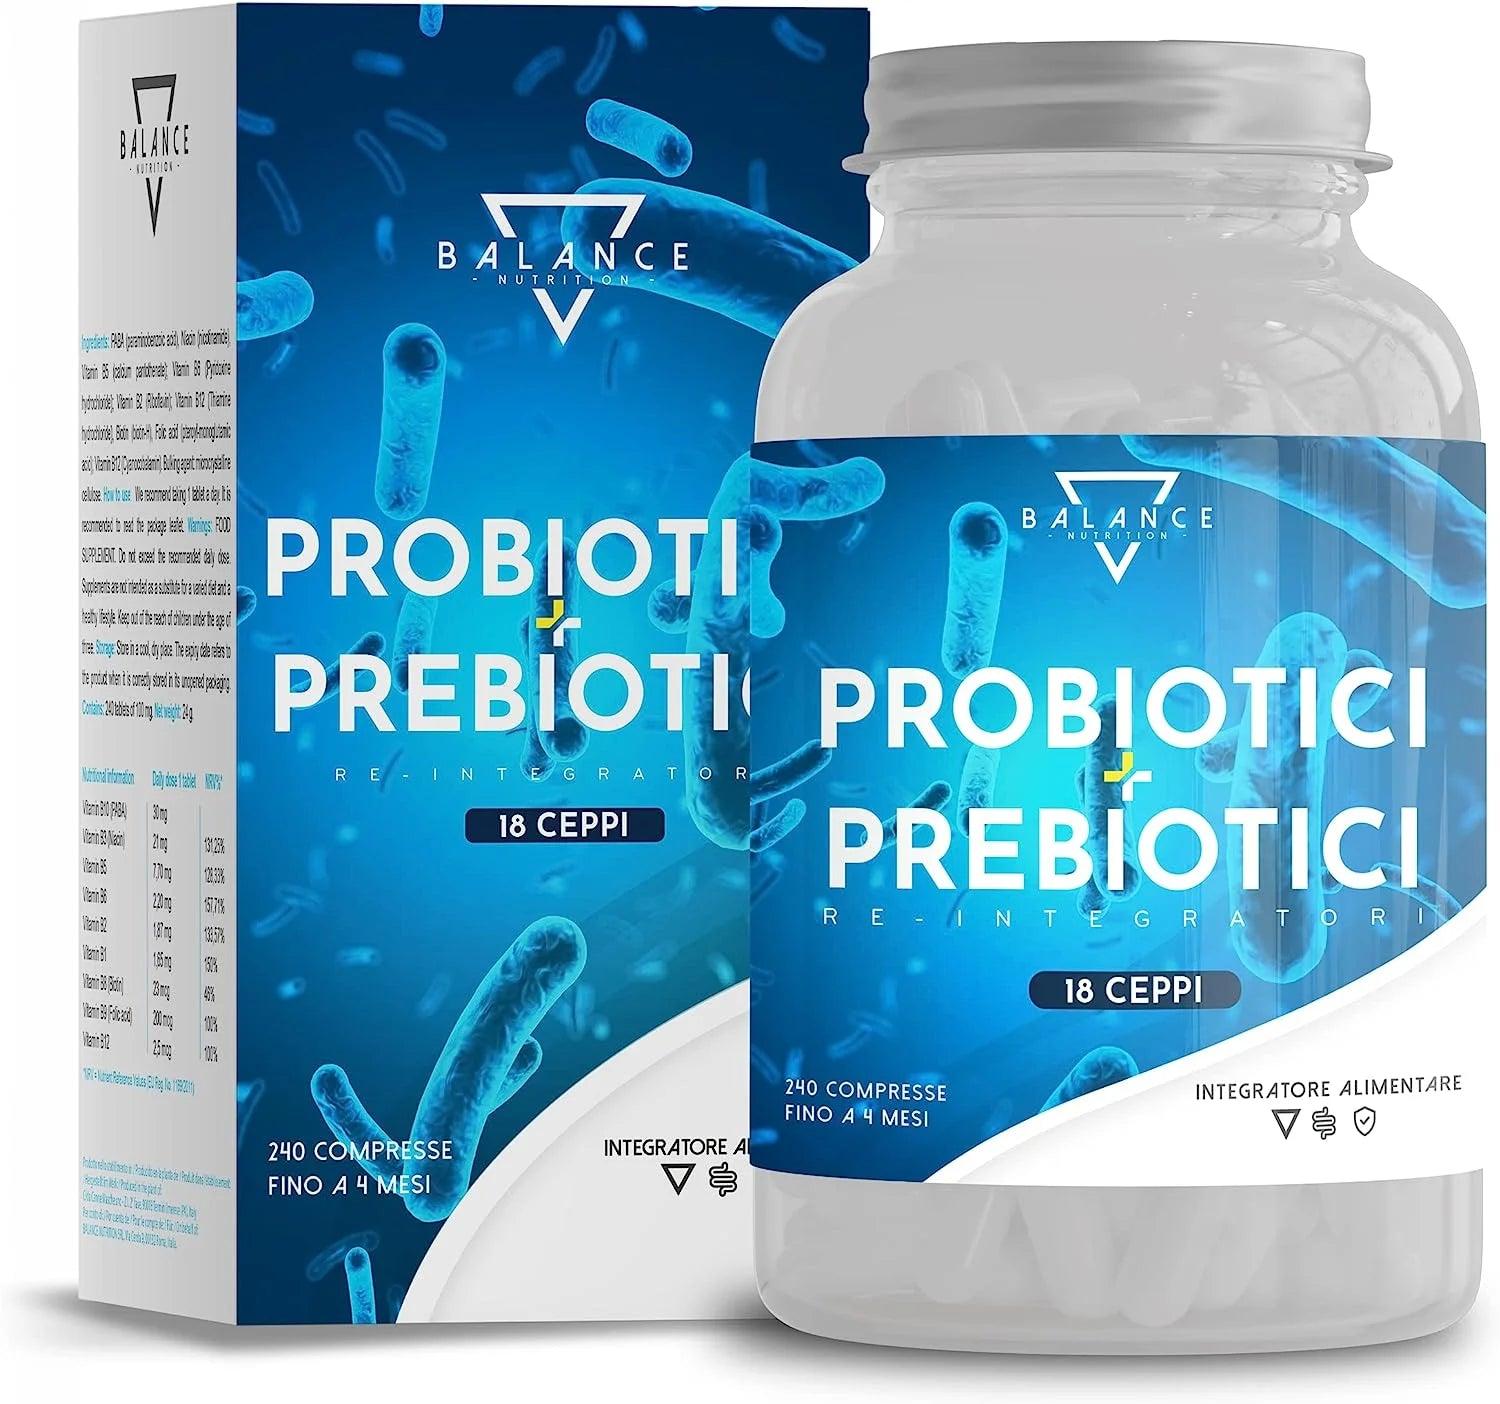 PROBIOTICI E PREBIOTICI - 240 CAPSULE | Fermenti Lattici Probiotici | Spettro Completo di 18 Ceppi Batterici tra cui, Lactobacillus, BifidoBacterium, Enzimi Digestivi, Inulina | fino a 20 Miliardi CFU